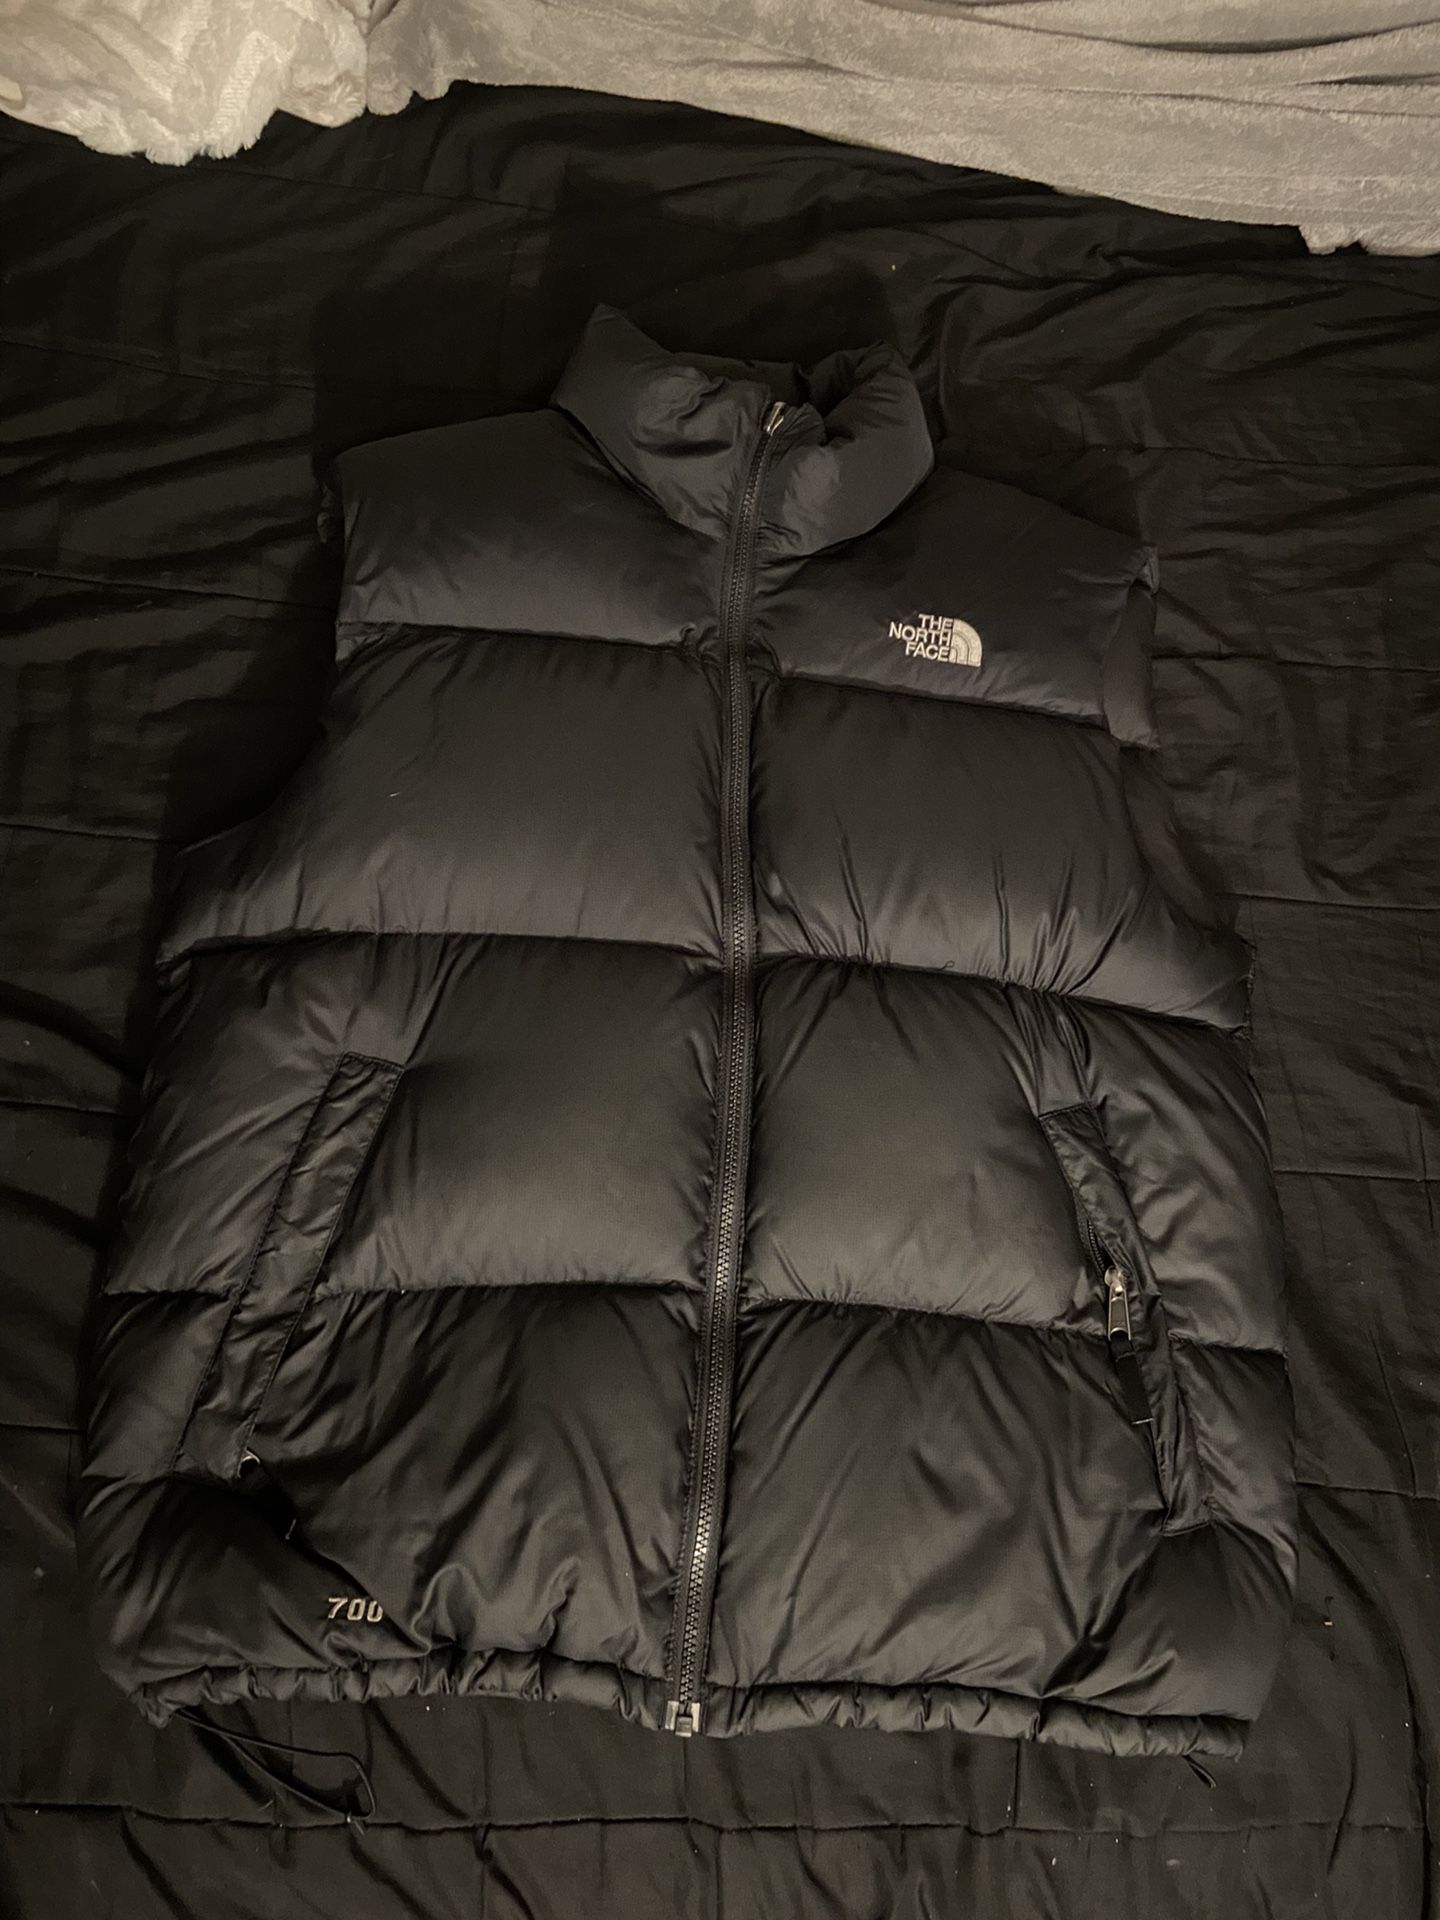 The North Face Gucci Nuptuse Puffer Vest size Xl rare, Men's